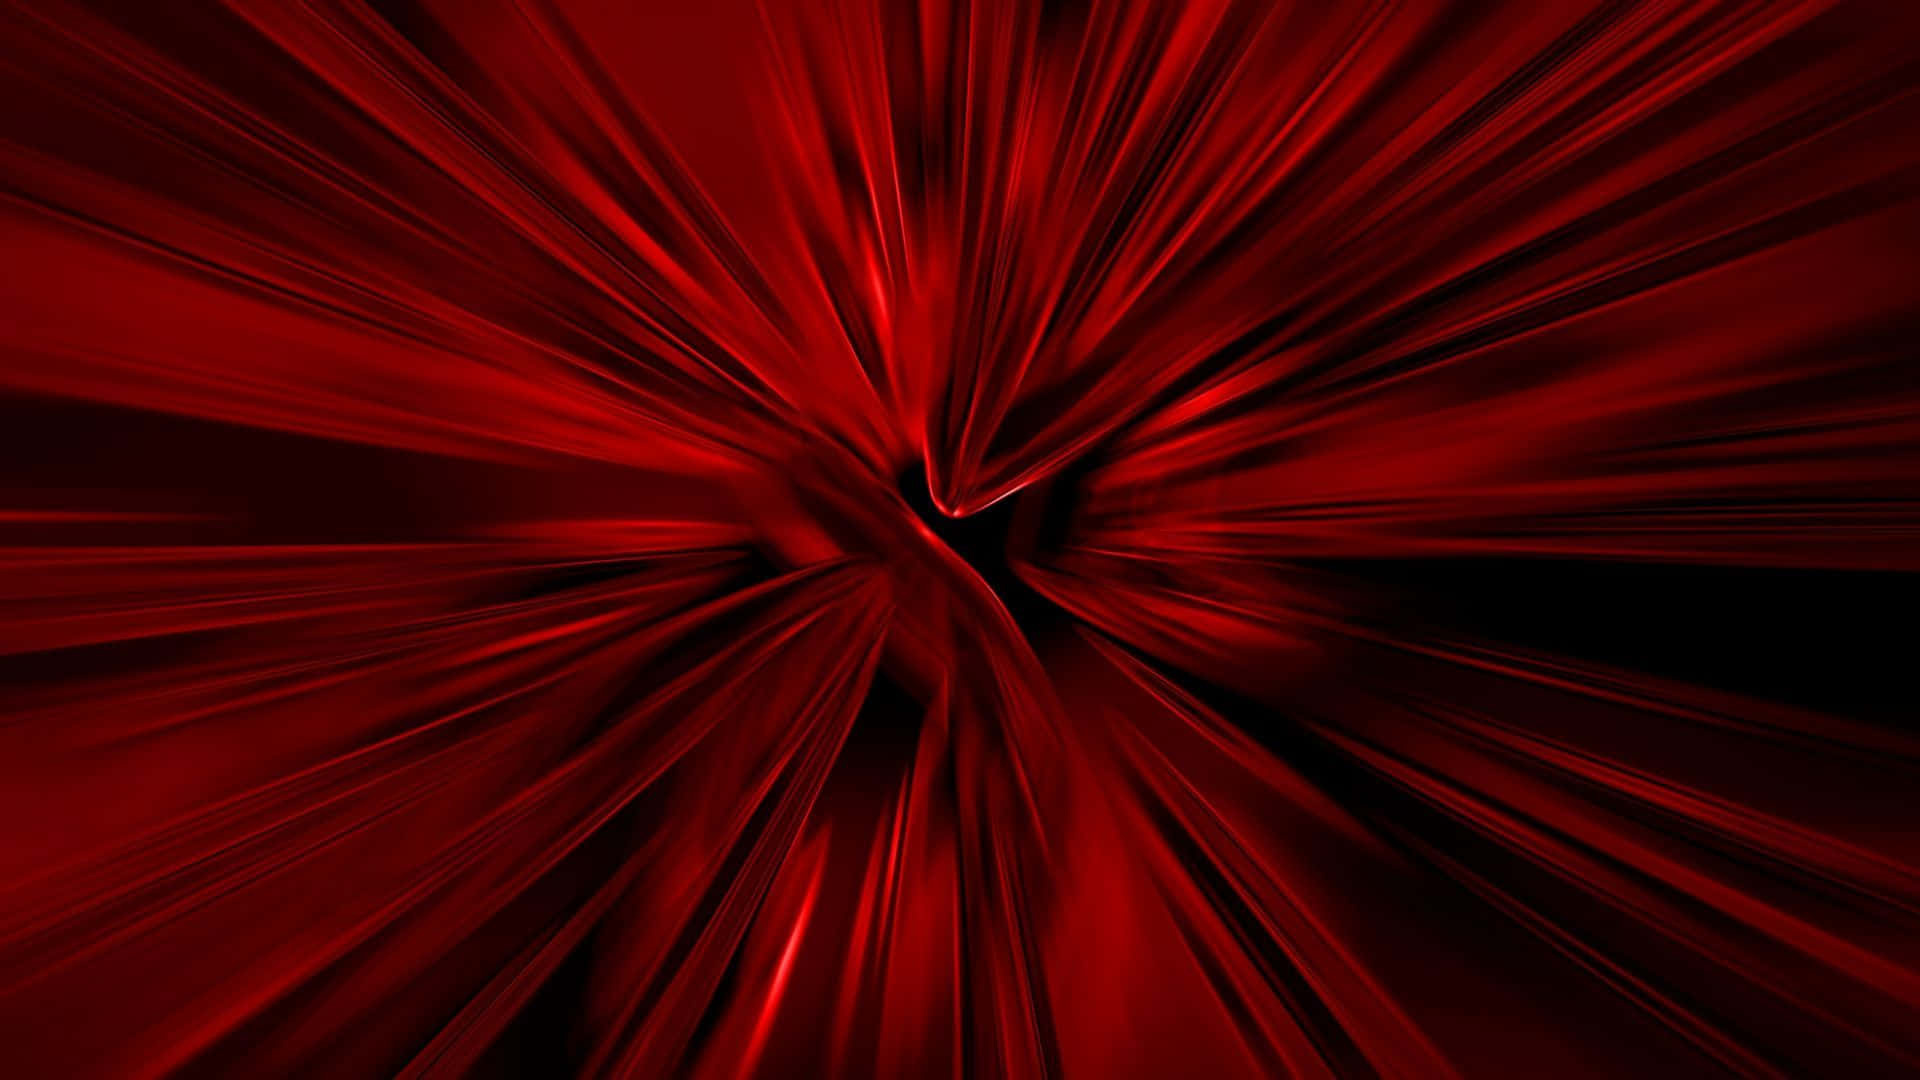 Dark Red Background Texture Effect Going Through The Center